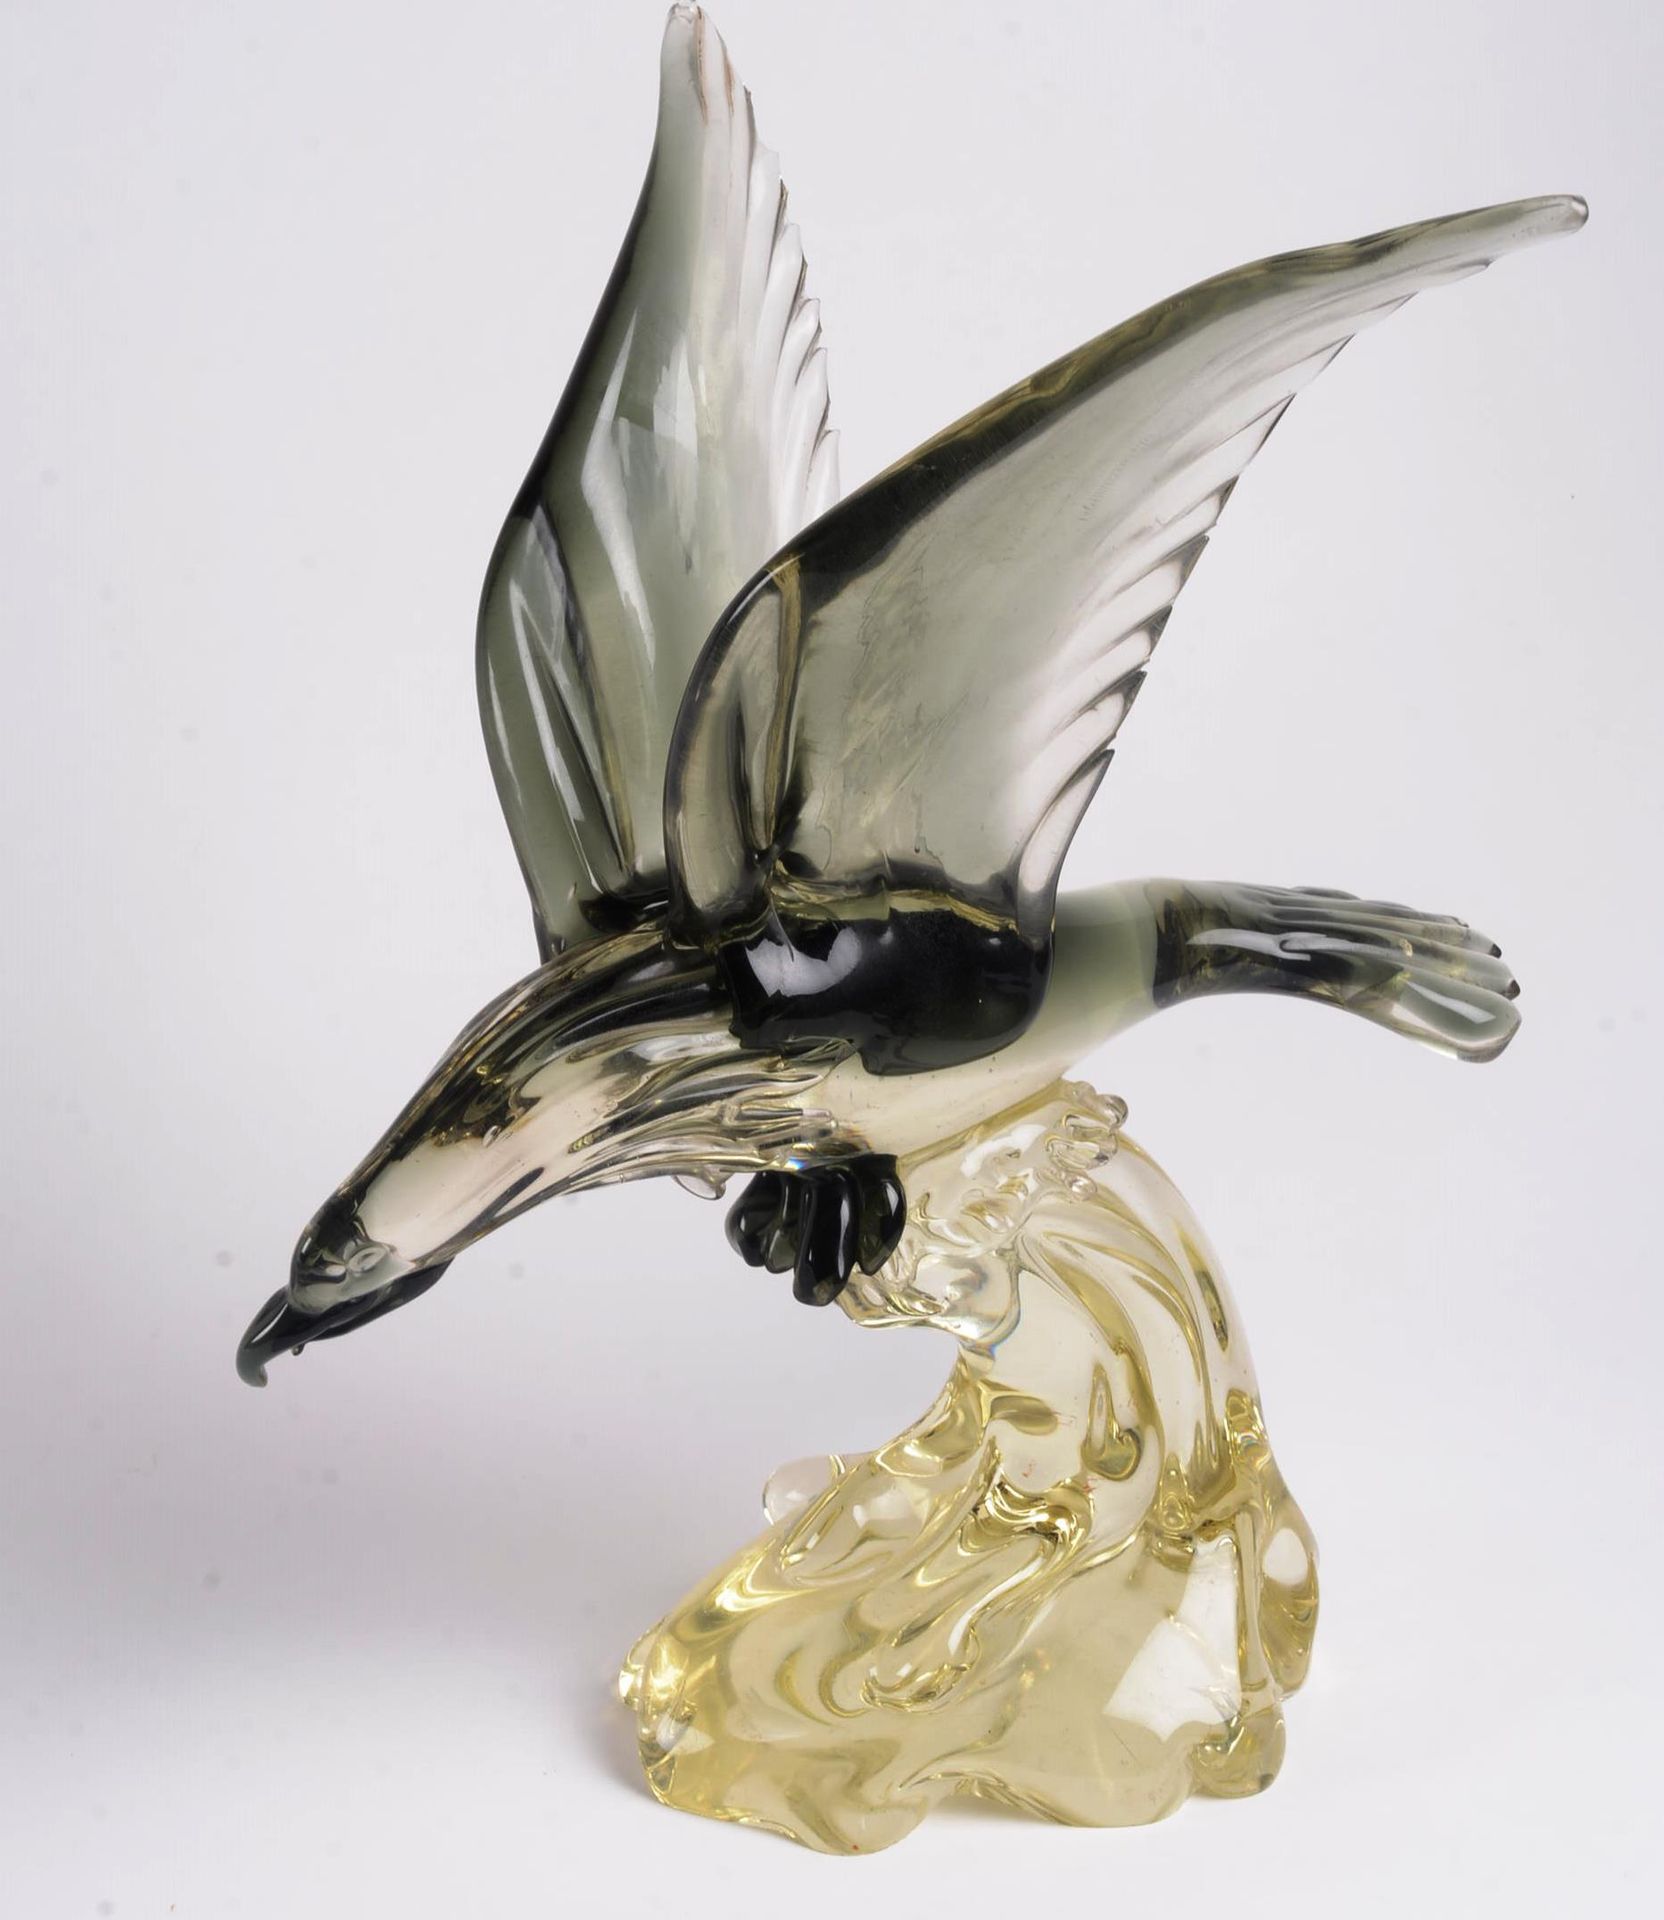 Aigle en cristal, VSL Val Saint Lambert.

张开翅膀的水晶鹰，在一些地方有绿色的衬托。

尺寸：36厘米 x 30厘米